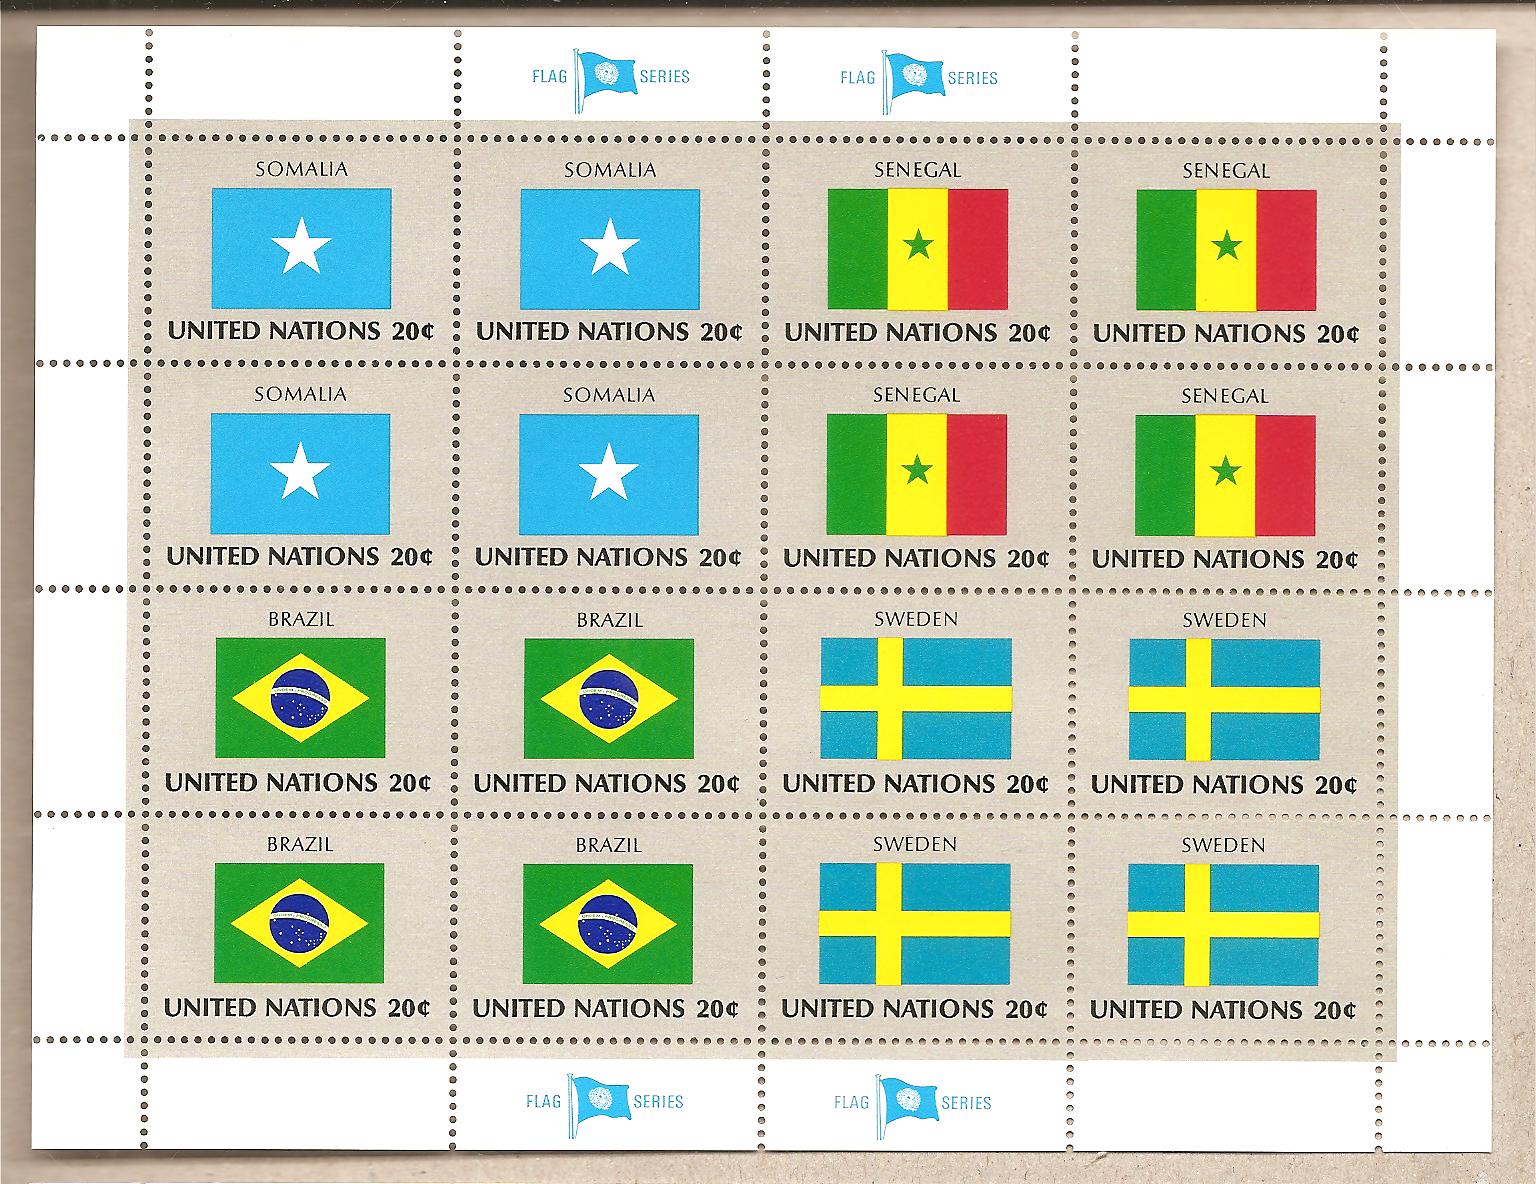 41290 - ONU New York - foglietto nuovo serie bandiere: Somalia, Senegal, Brasile, Svezia